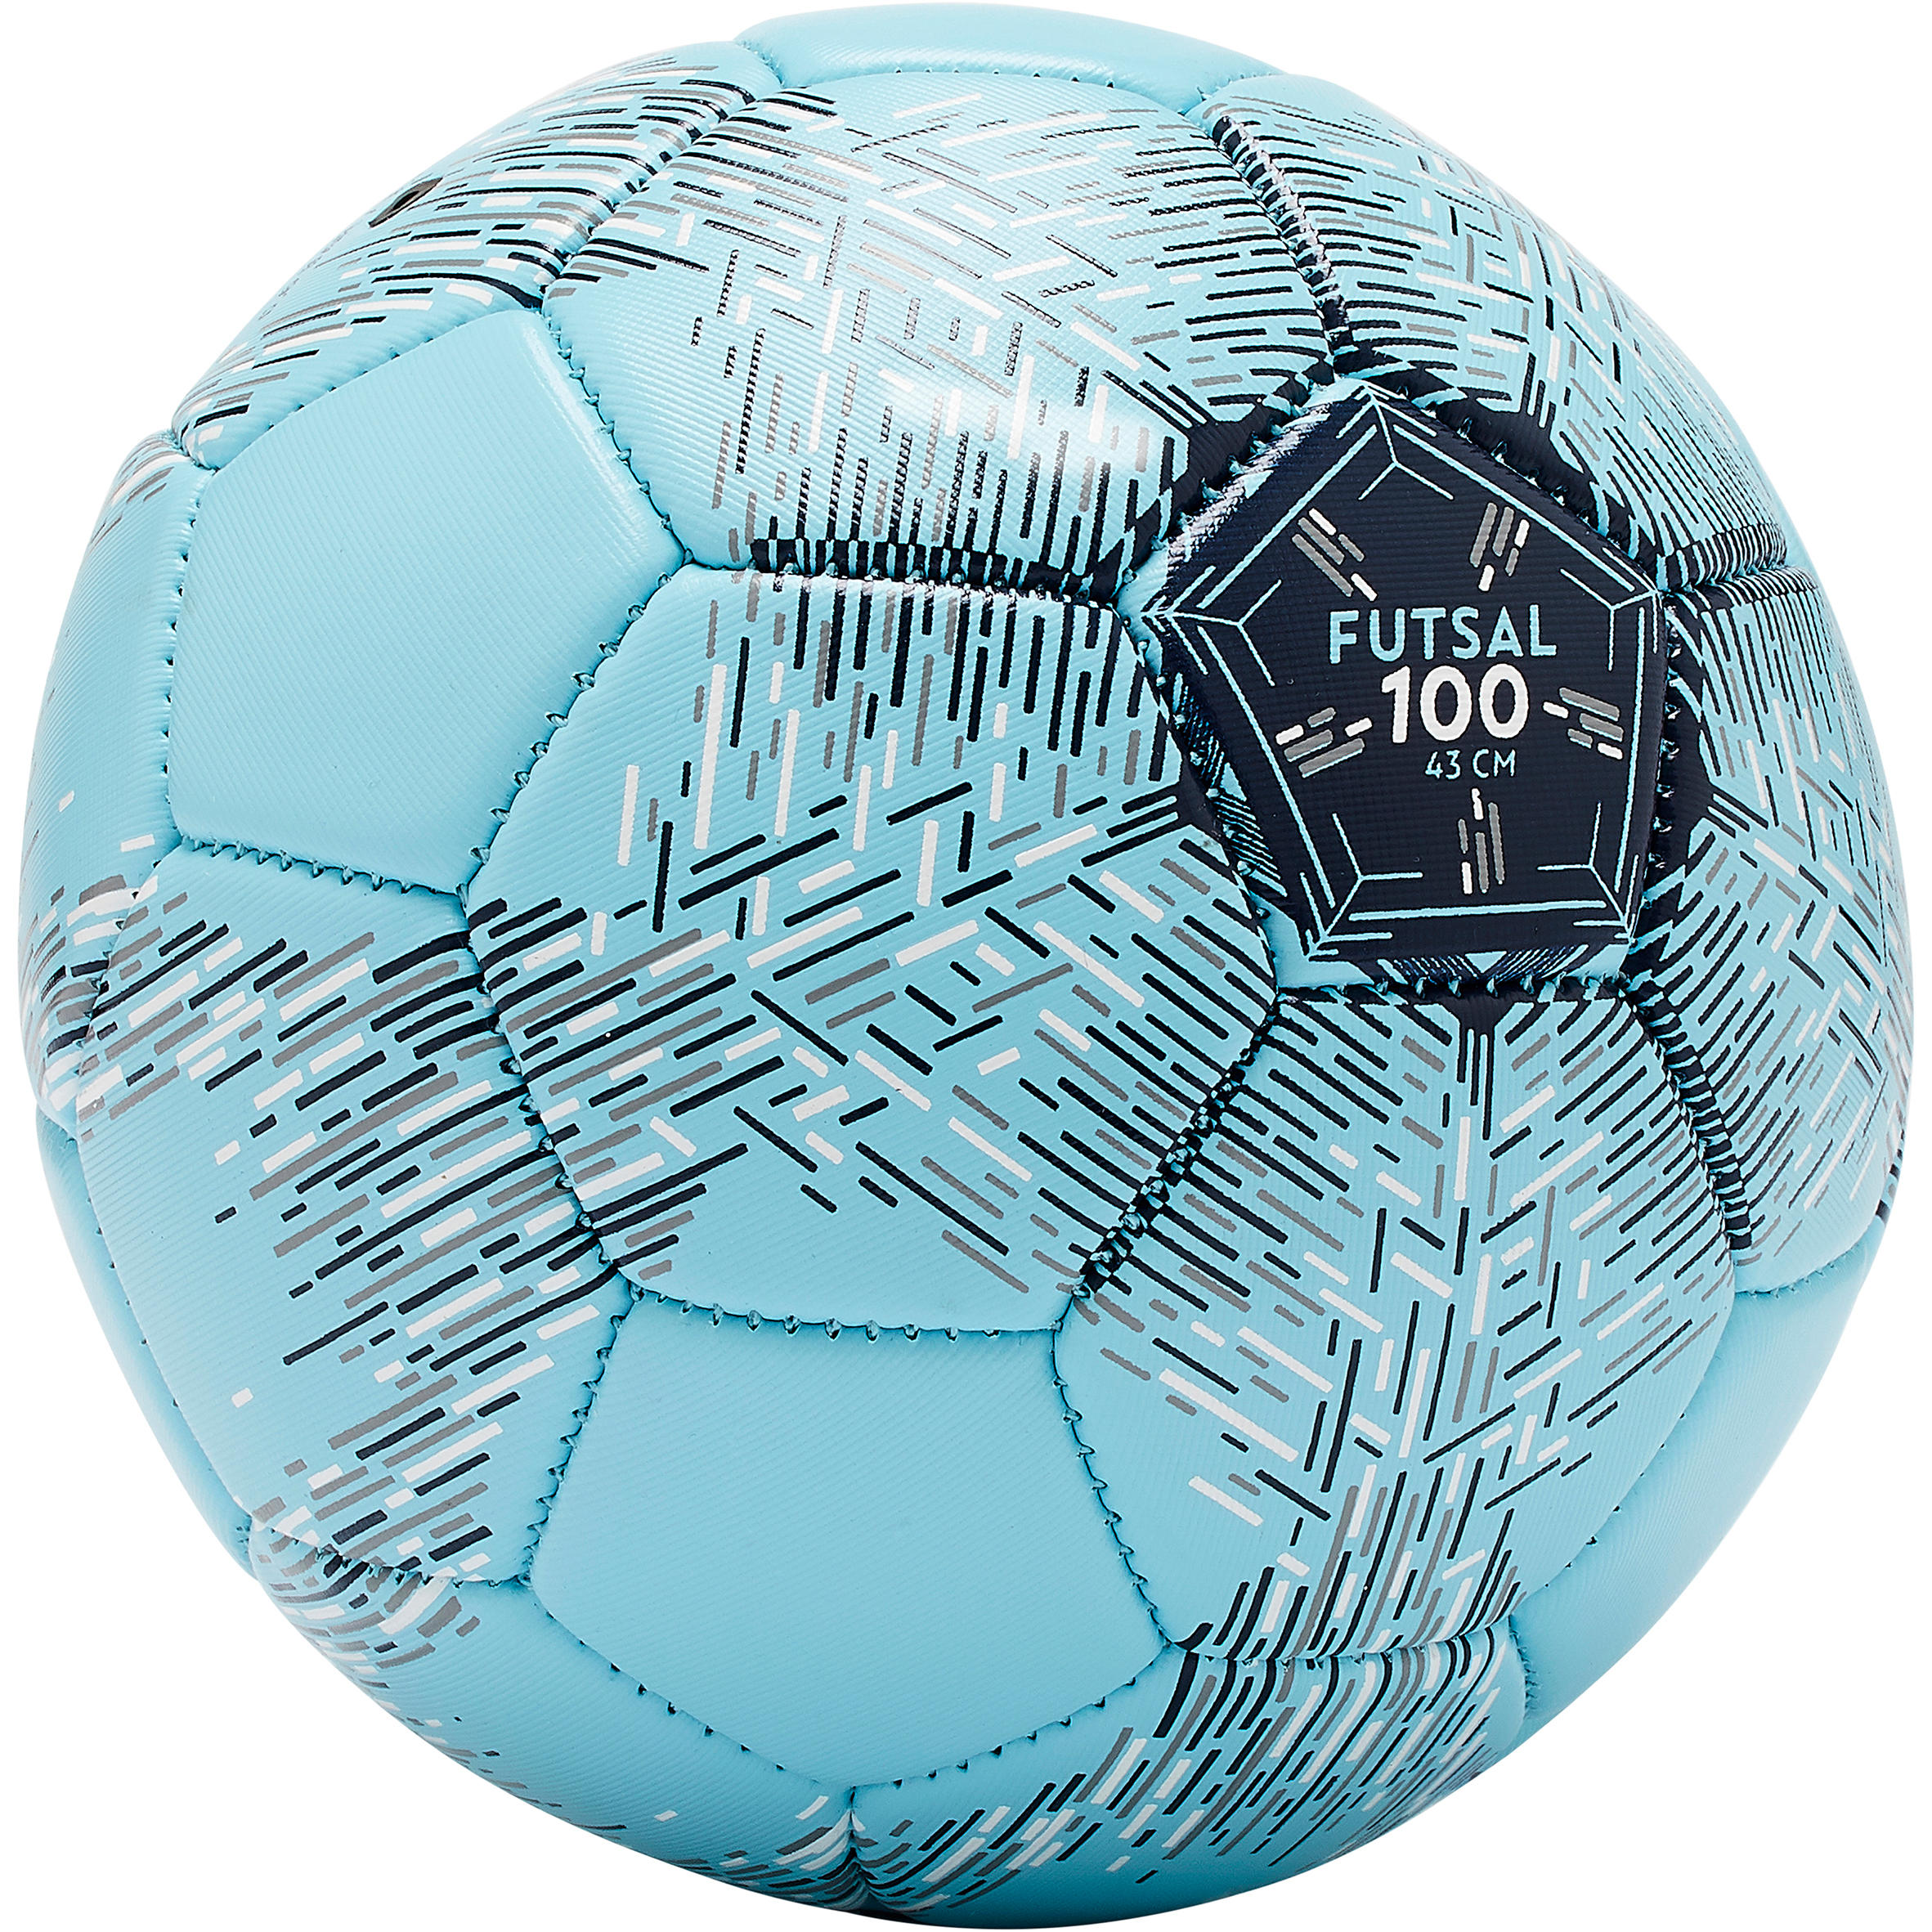 Futsal Ball FS100 - 43 cm (Size 1) 1/7